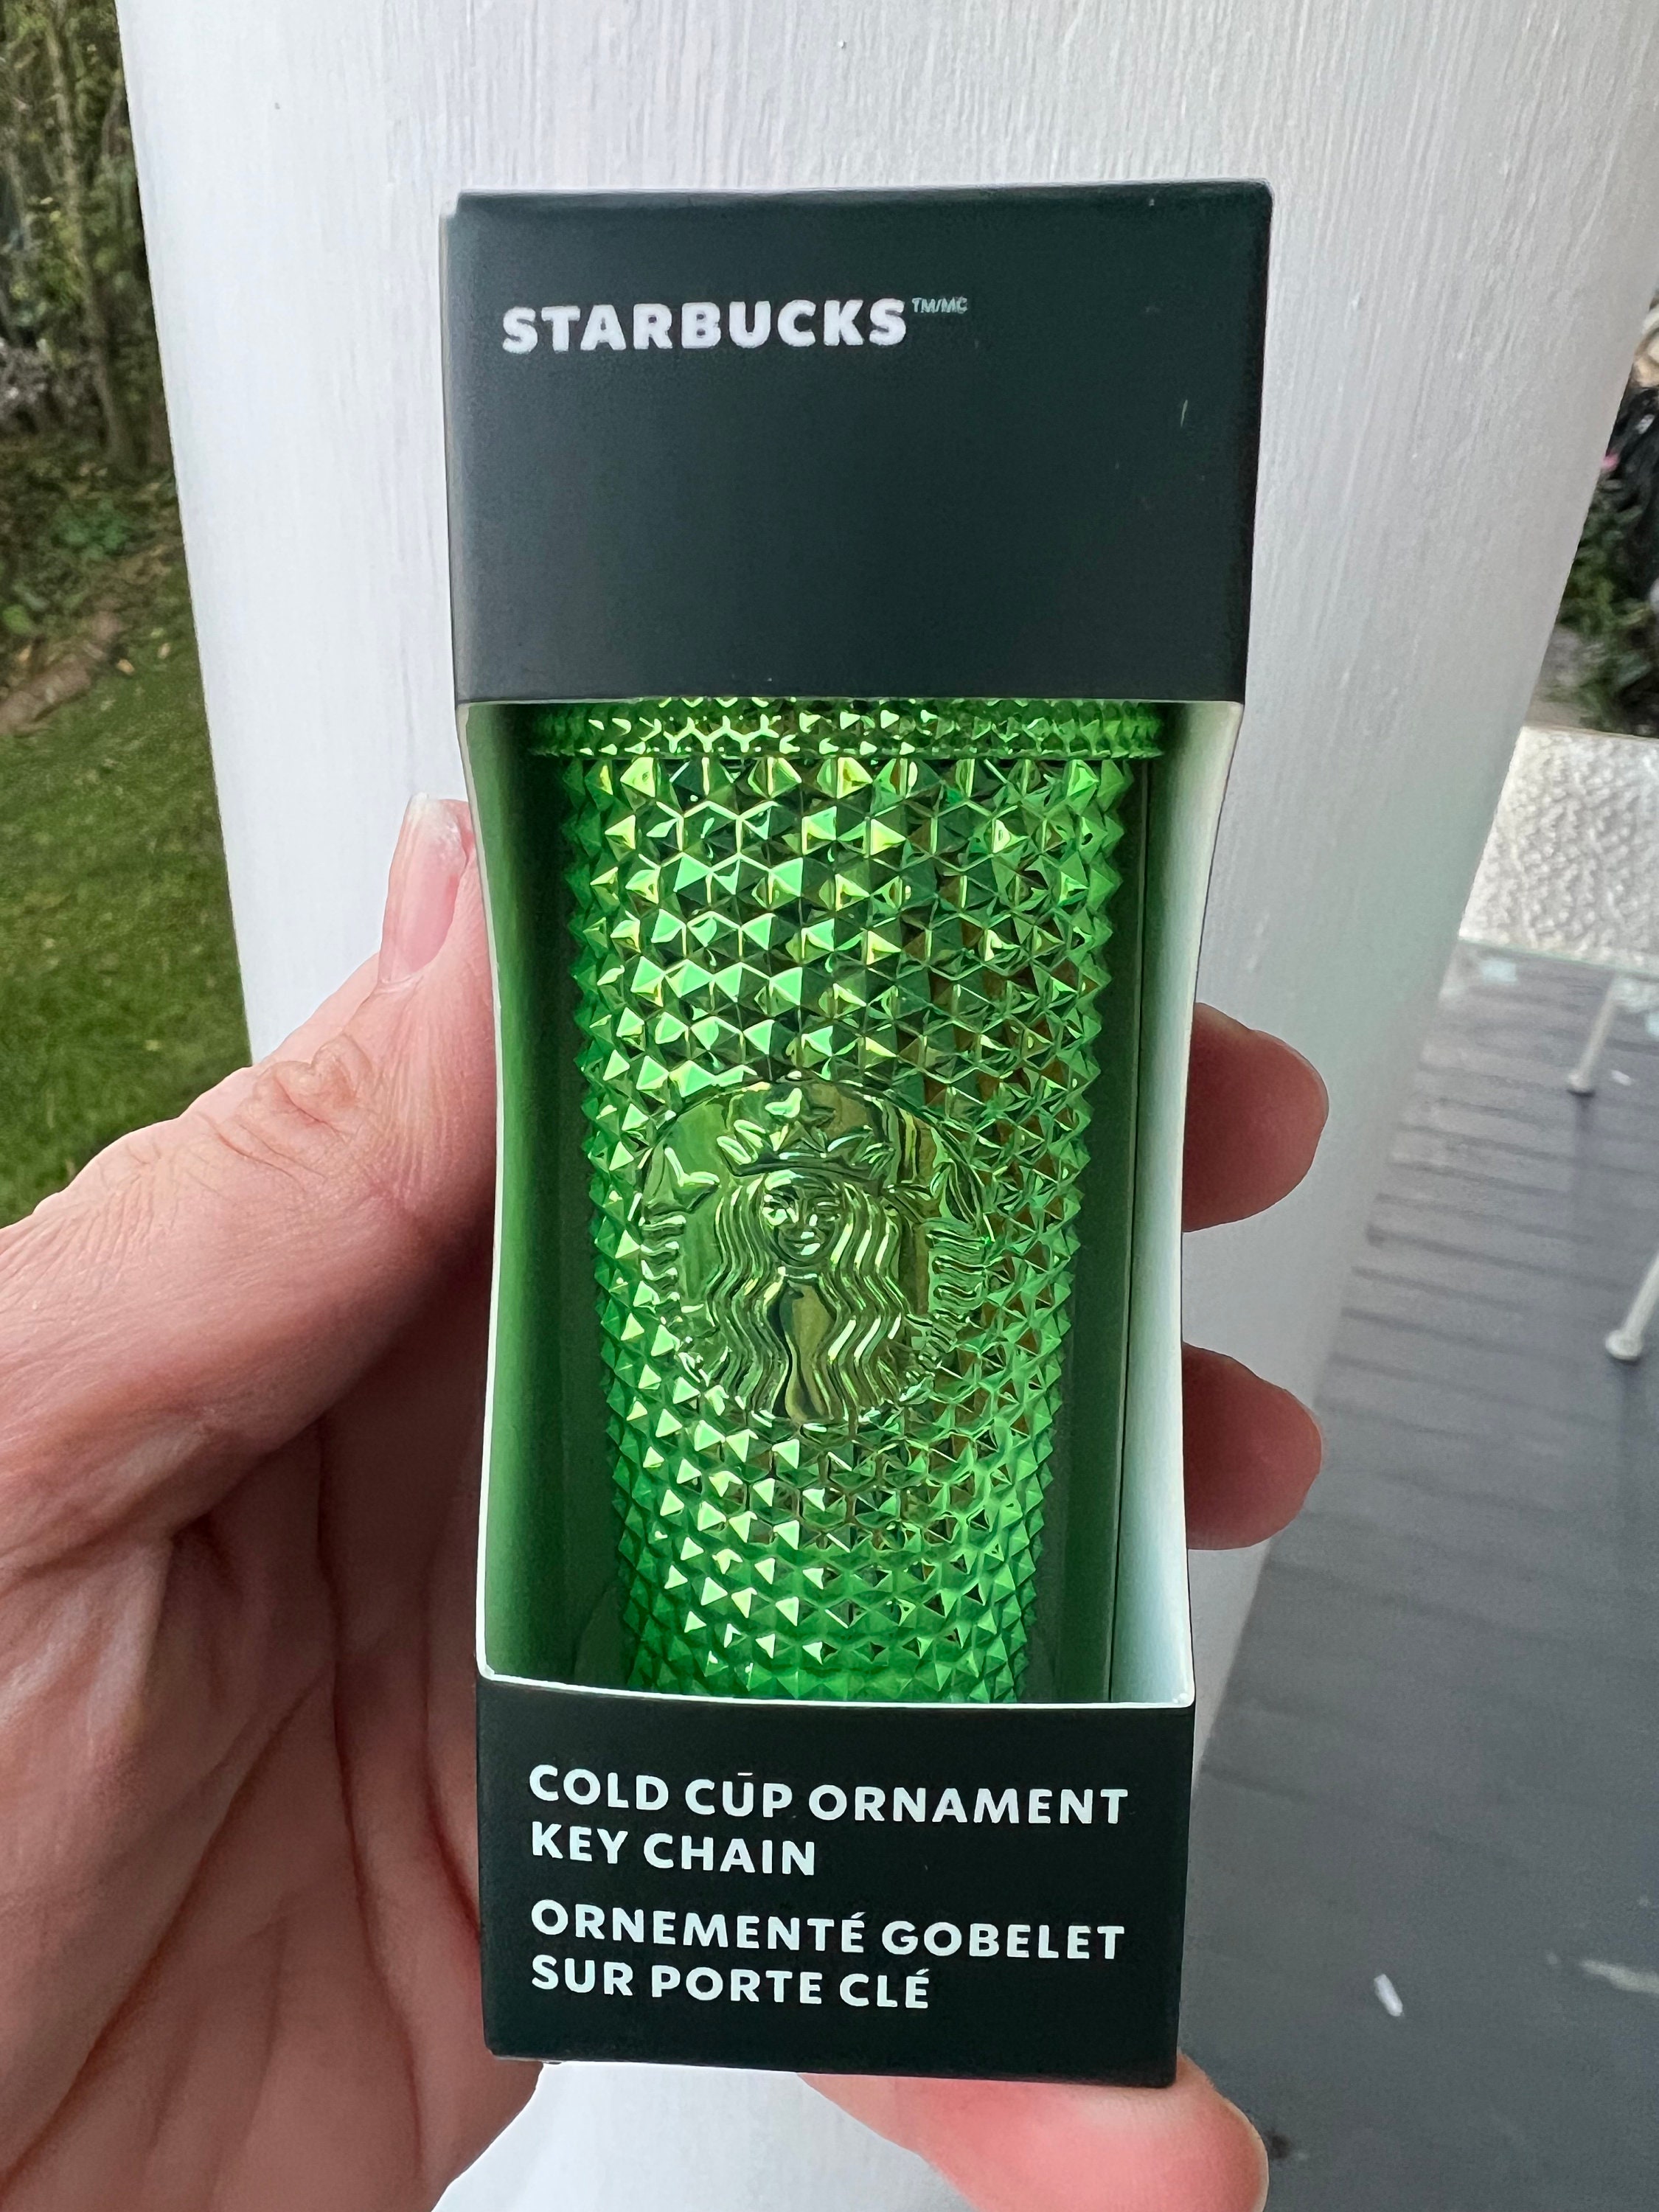 Finally found a cold cup keychain! #starbucks #starbucksdrinks